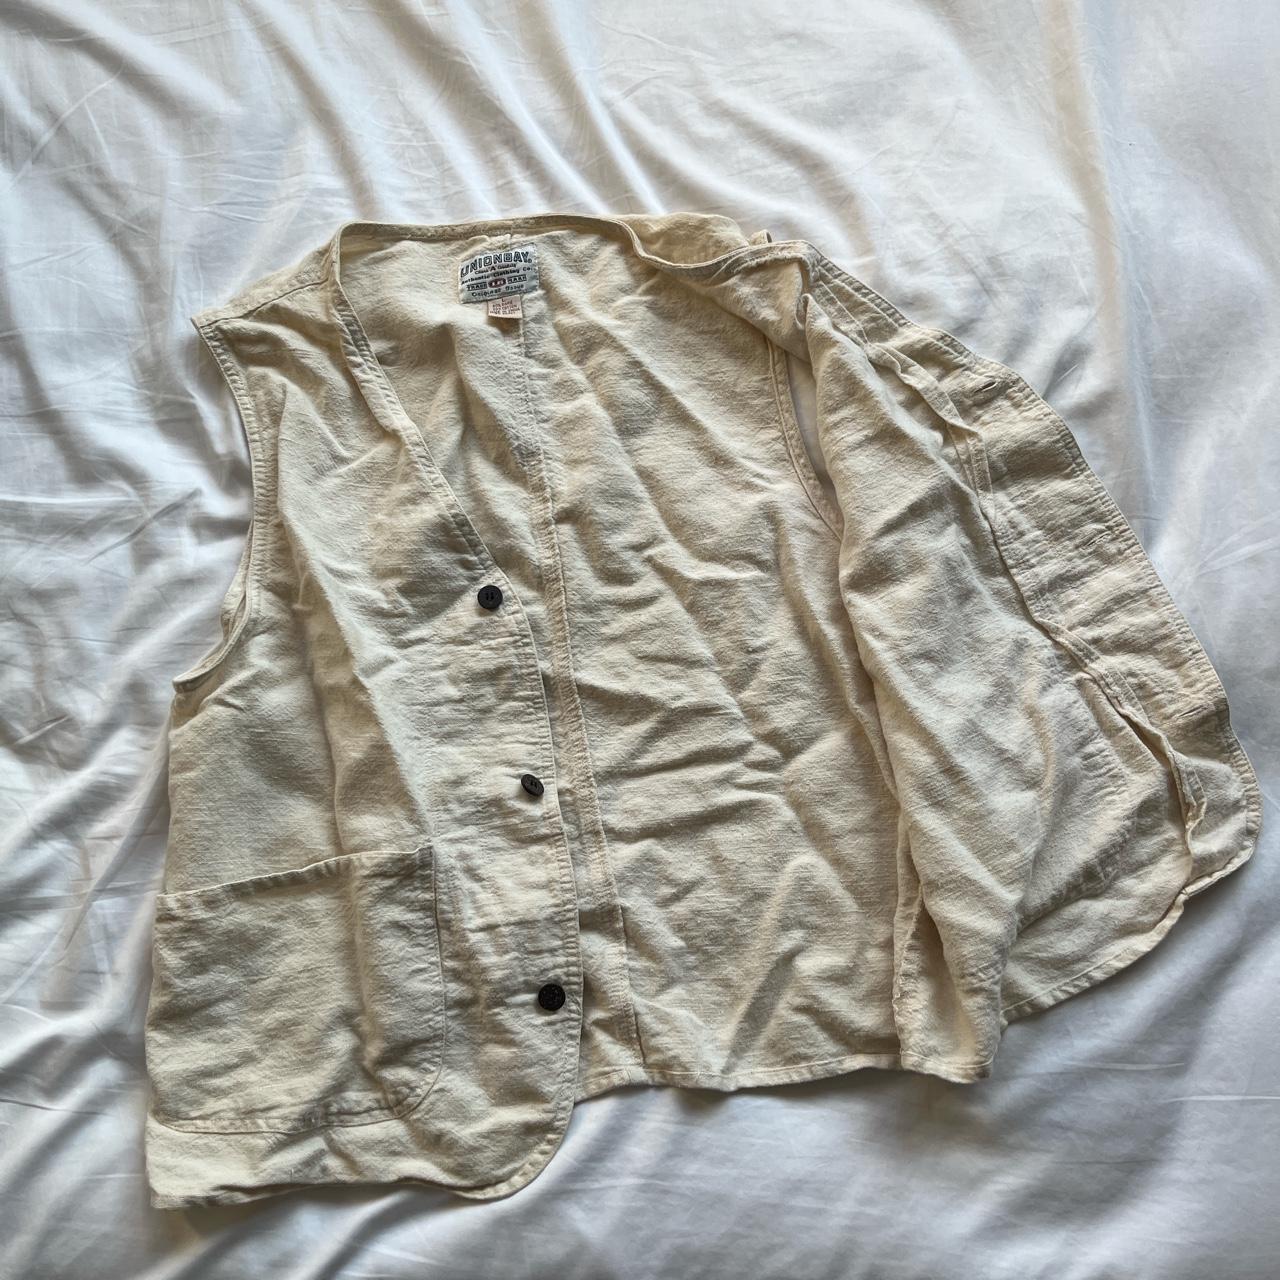 Union Bay Men's Tan and Cream Shirt (3)